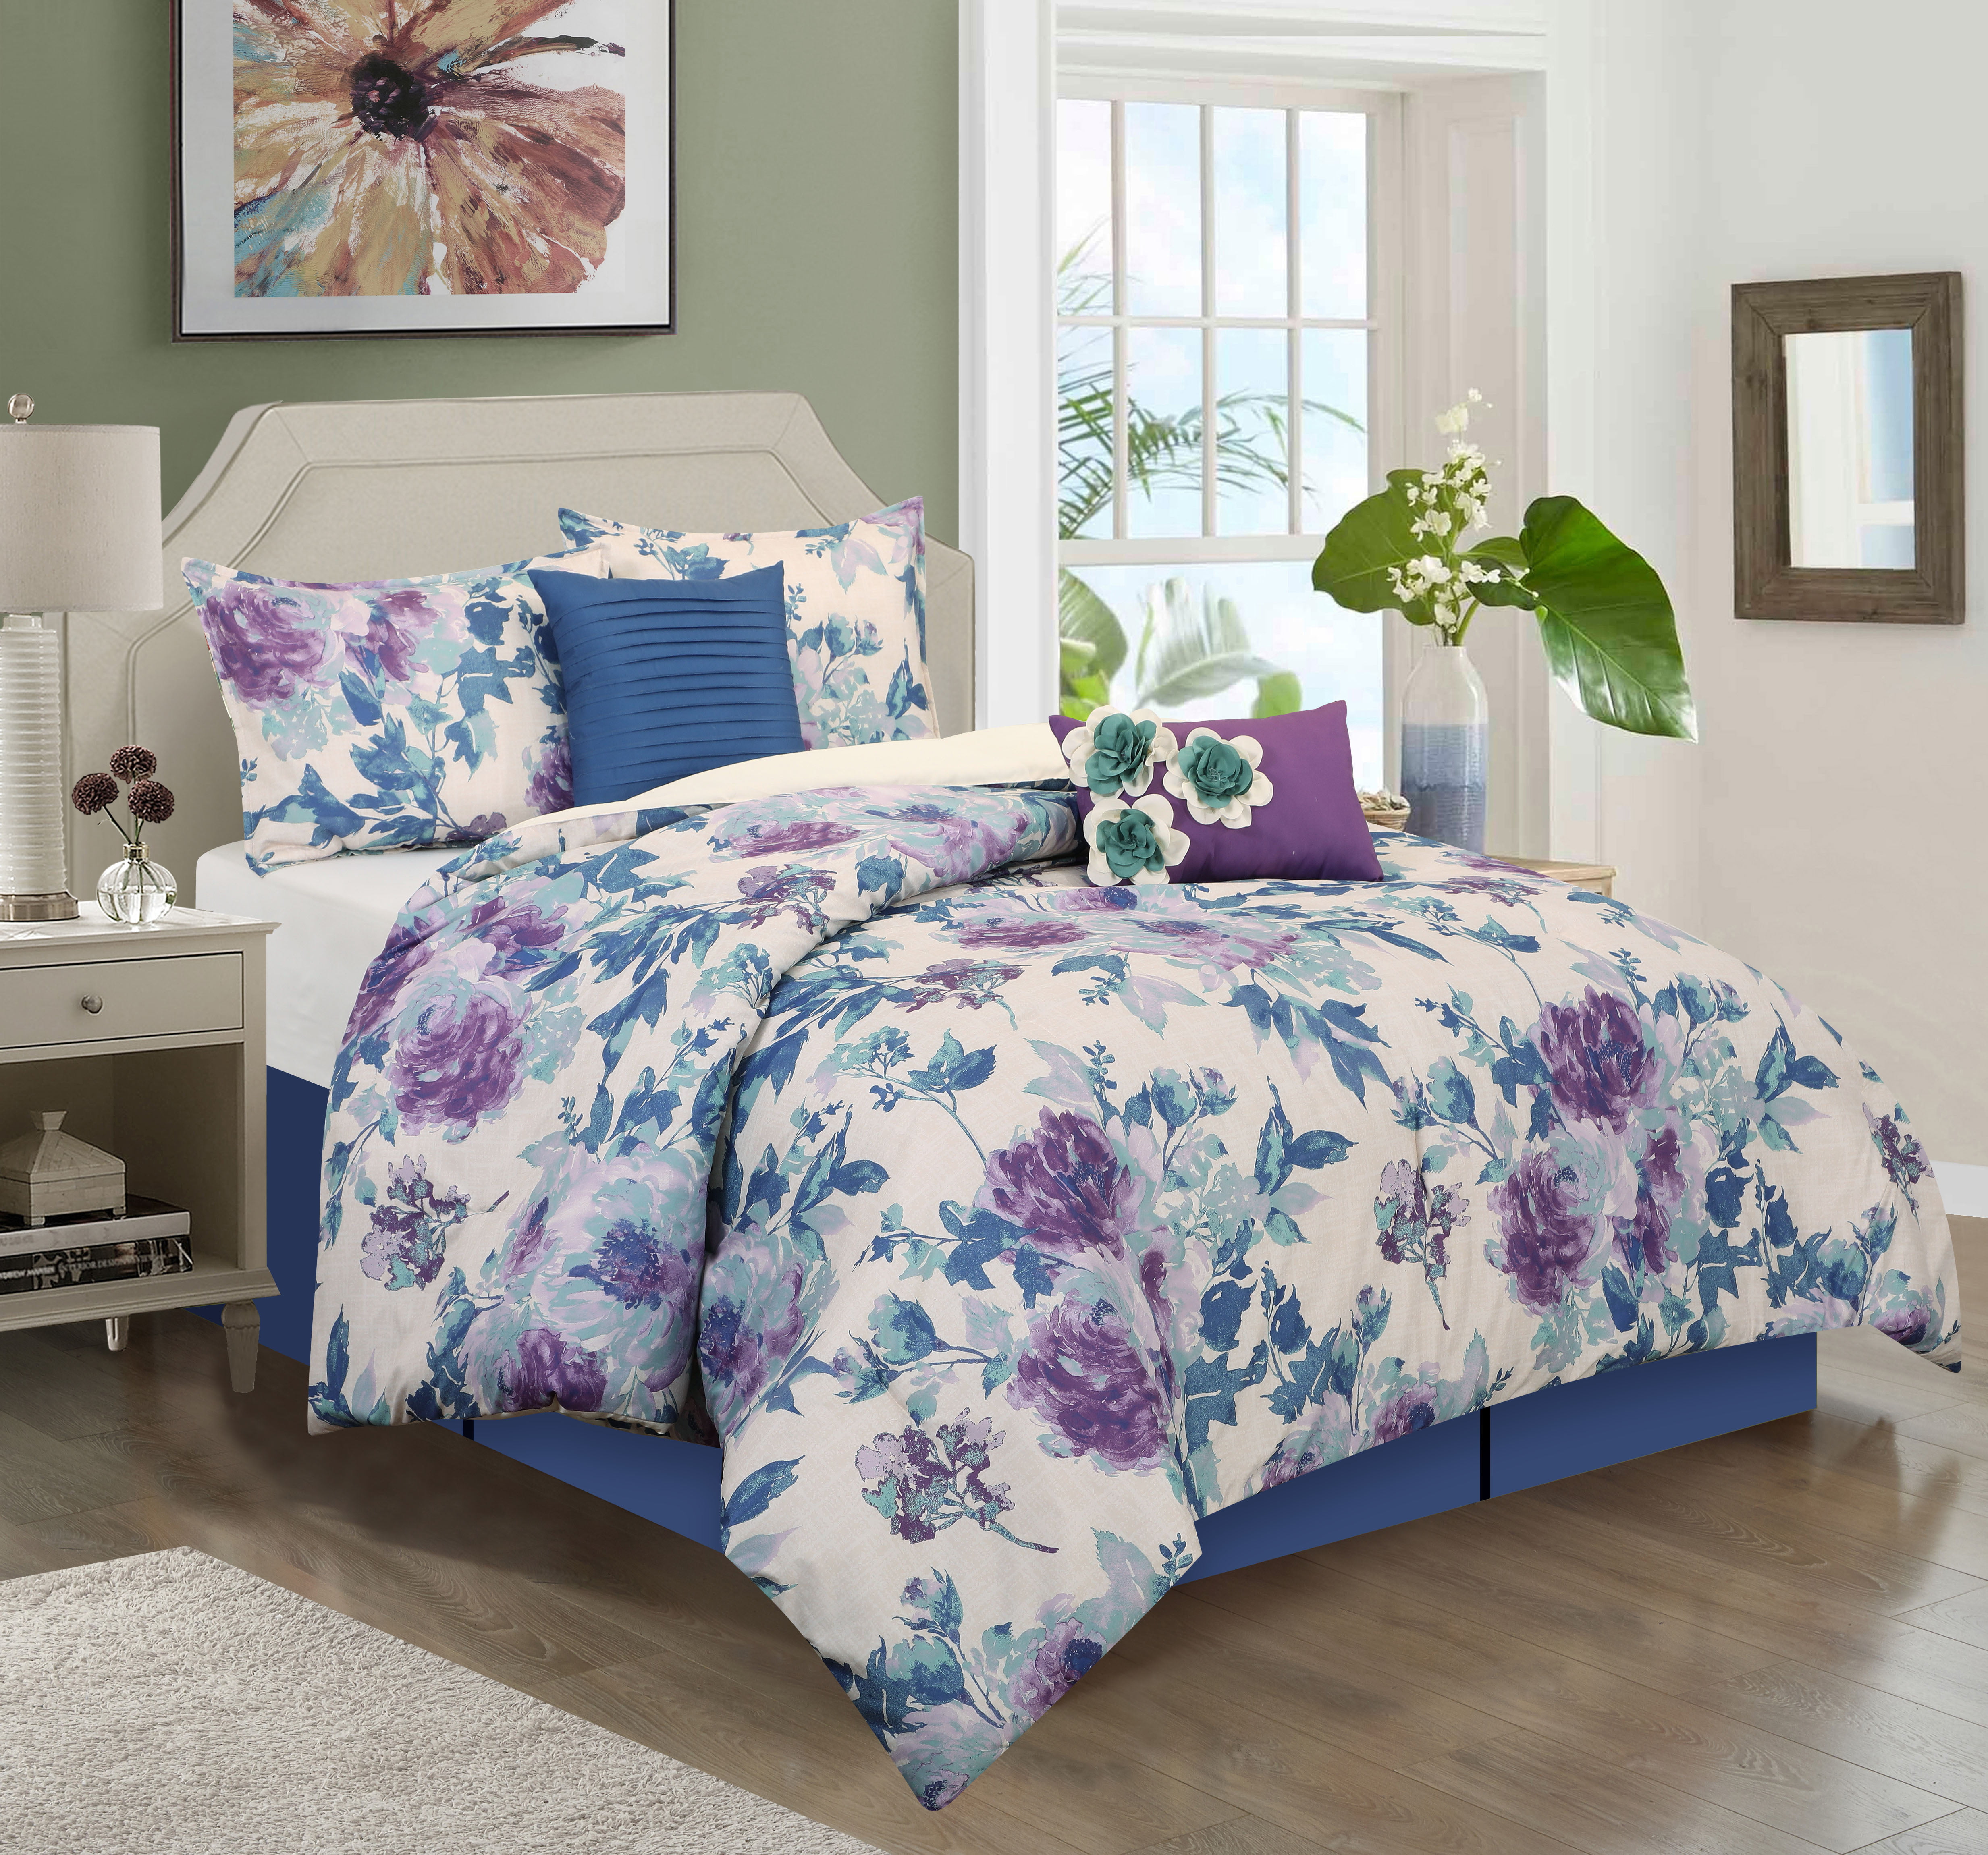 Bed Set Online Shopping - Best Design Idea